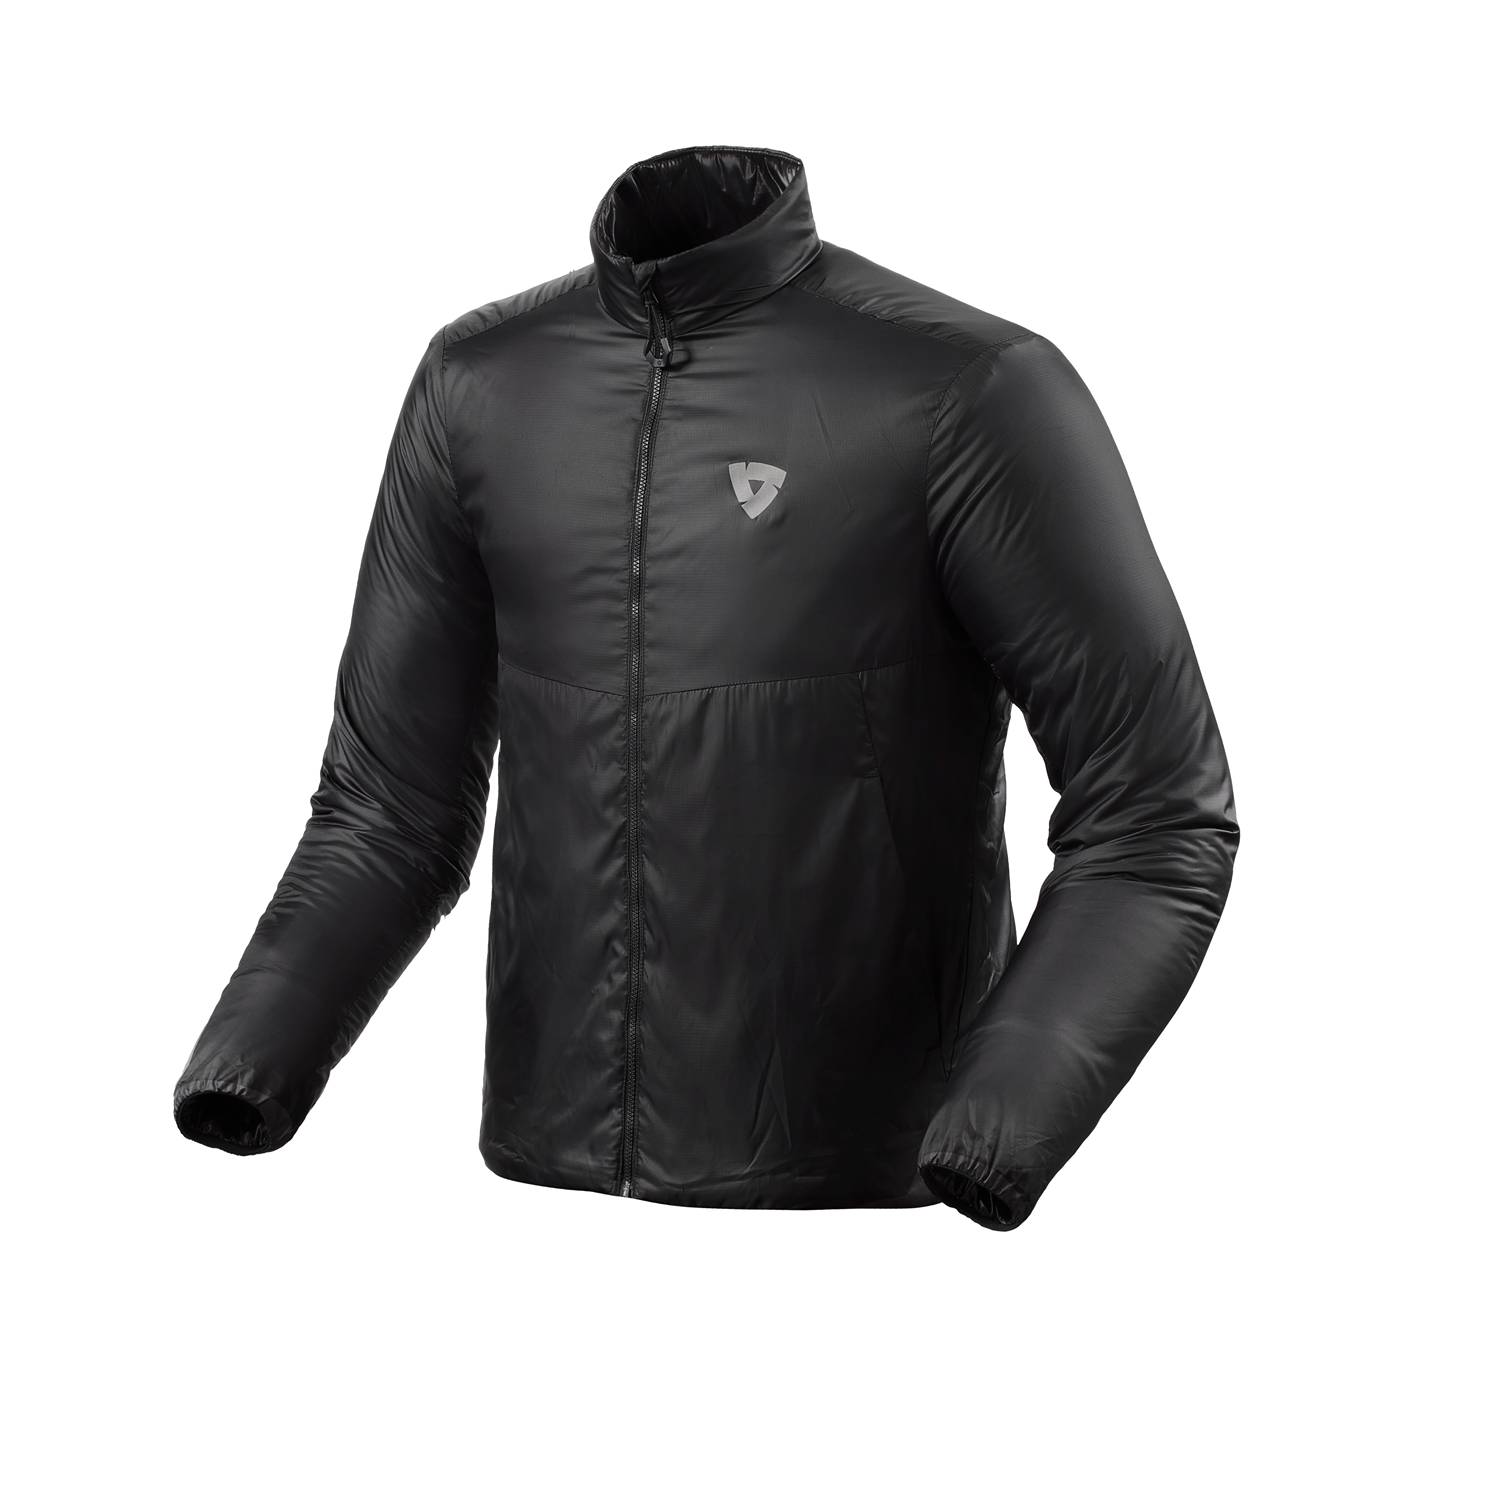 Image of REV'IT! Core 2 Mid Layer Jacket Black Size XL EN